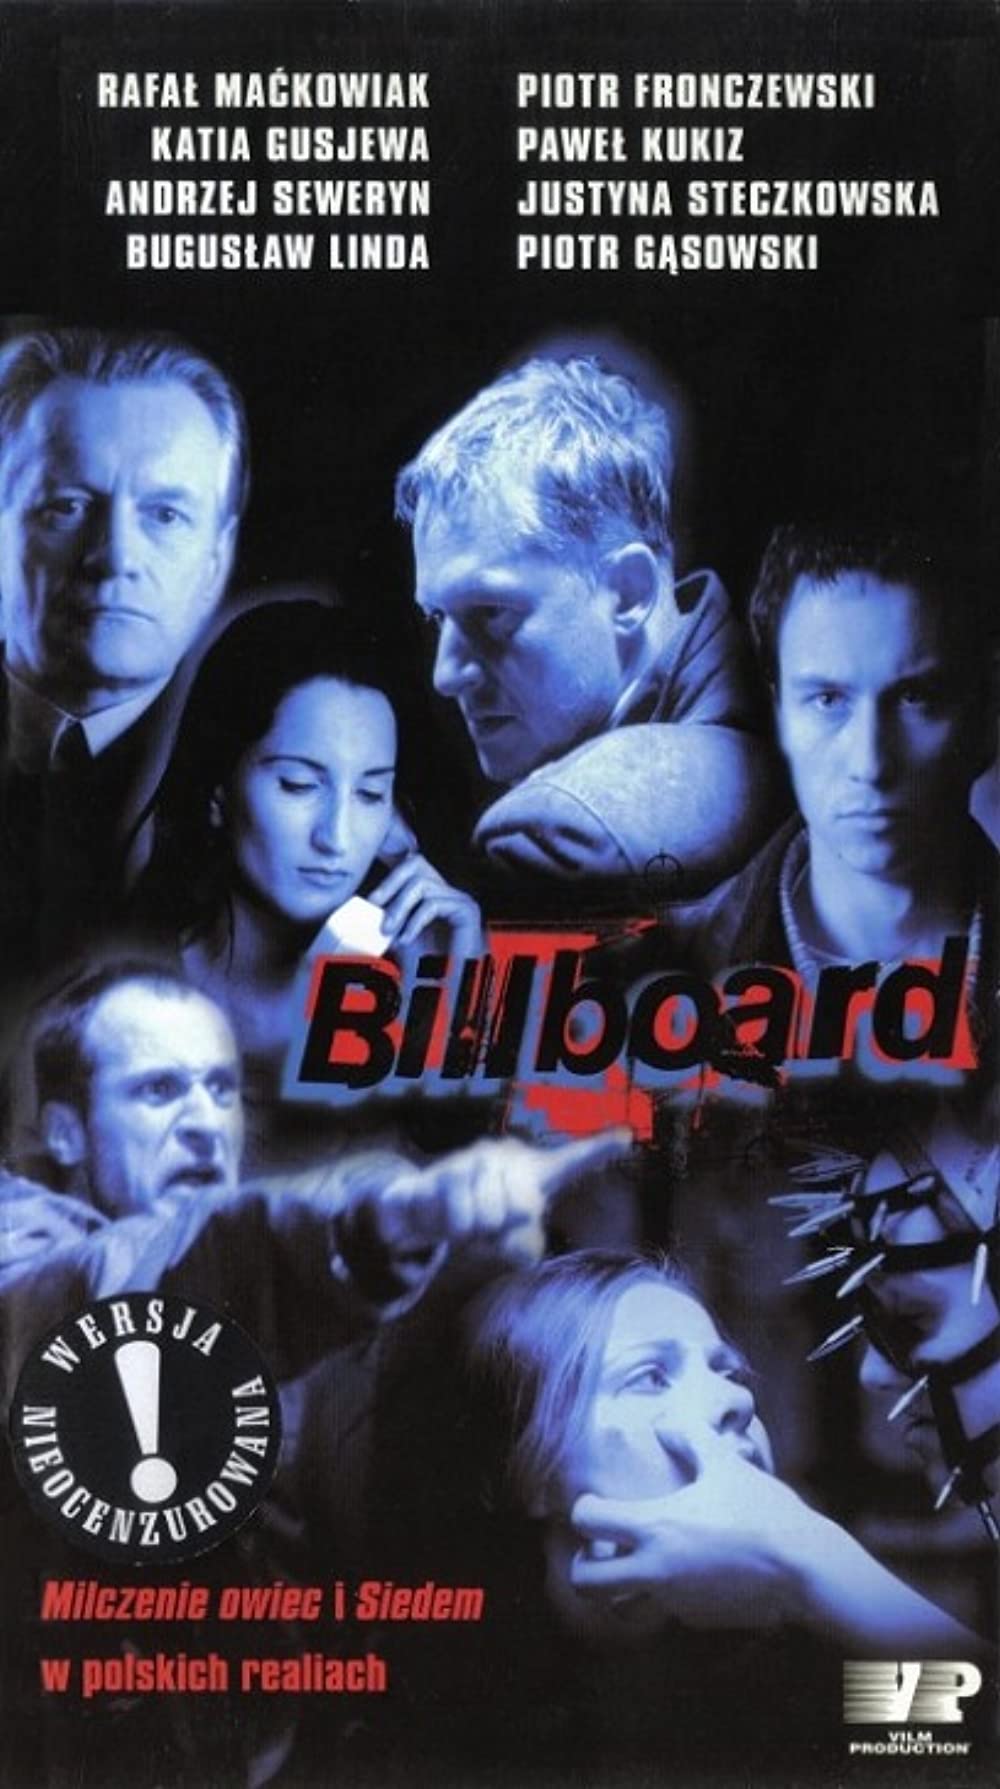 Download Billboard Movie | Billboard Download